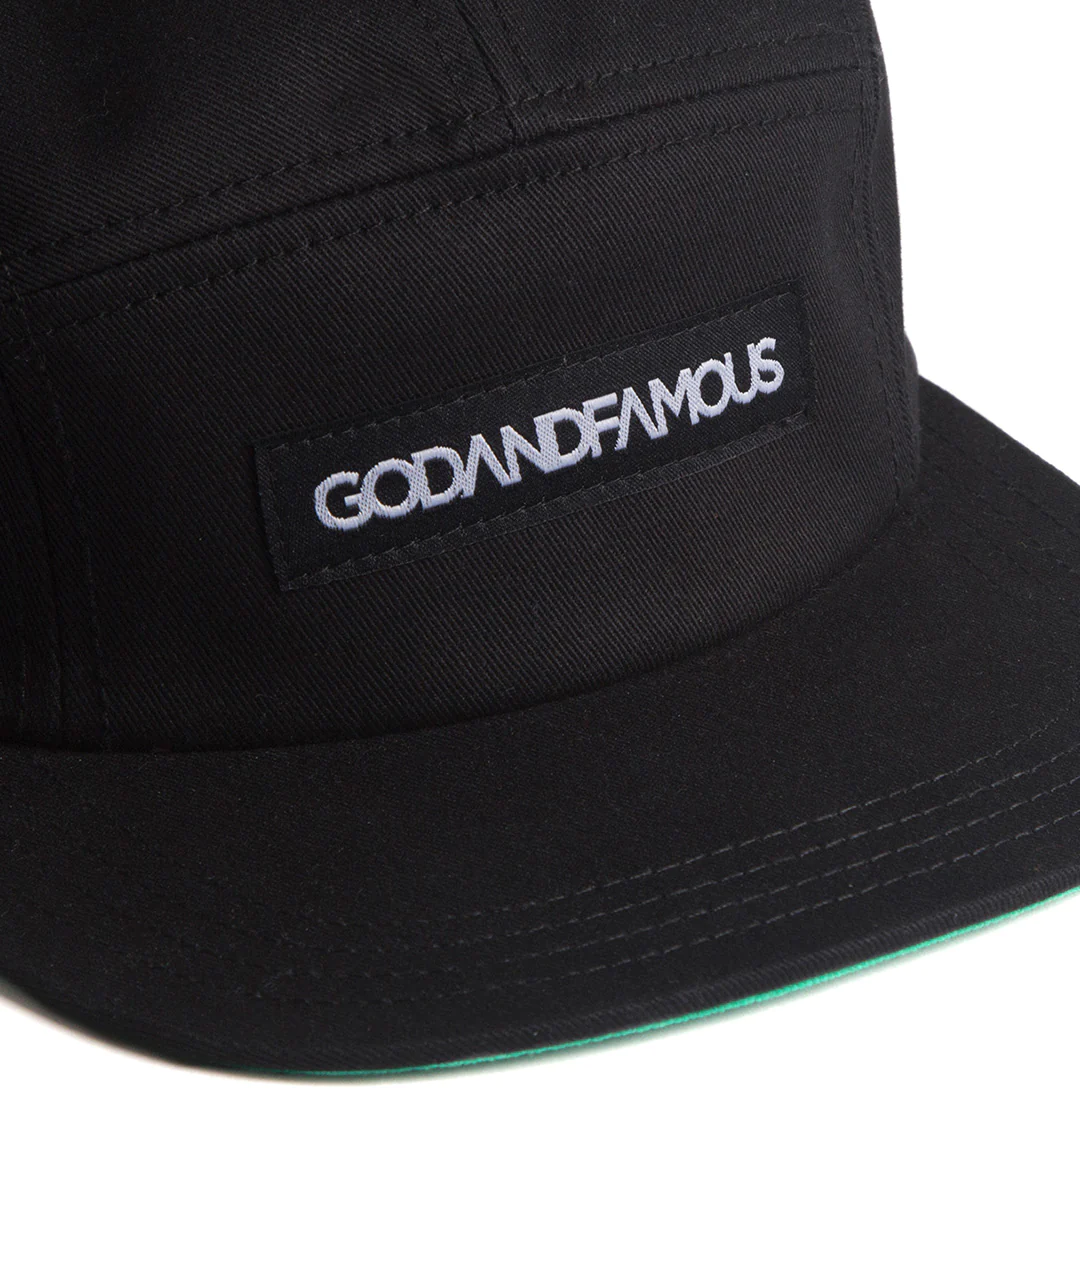 God & Famous Team 5-Panel Hat - Black